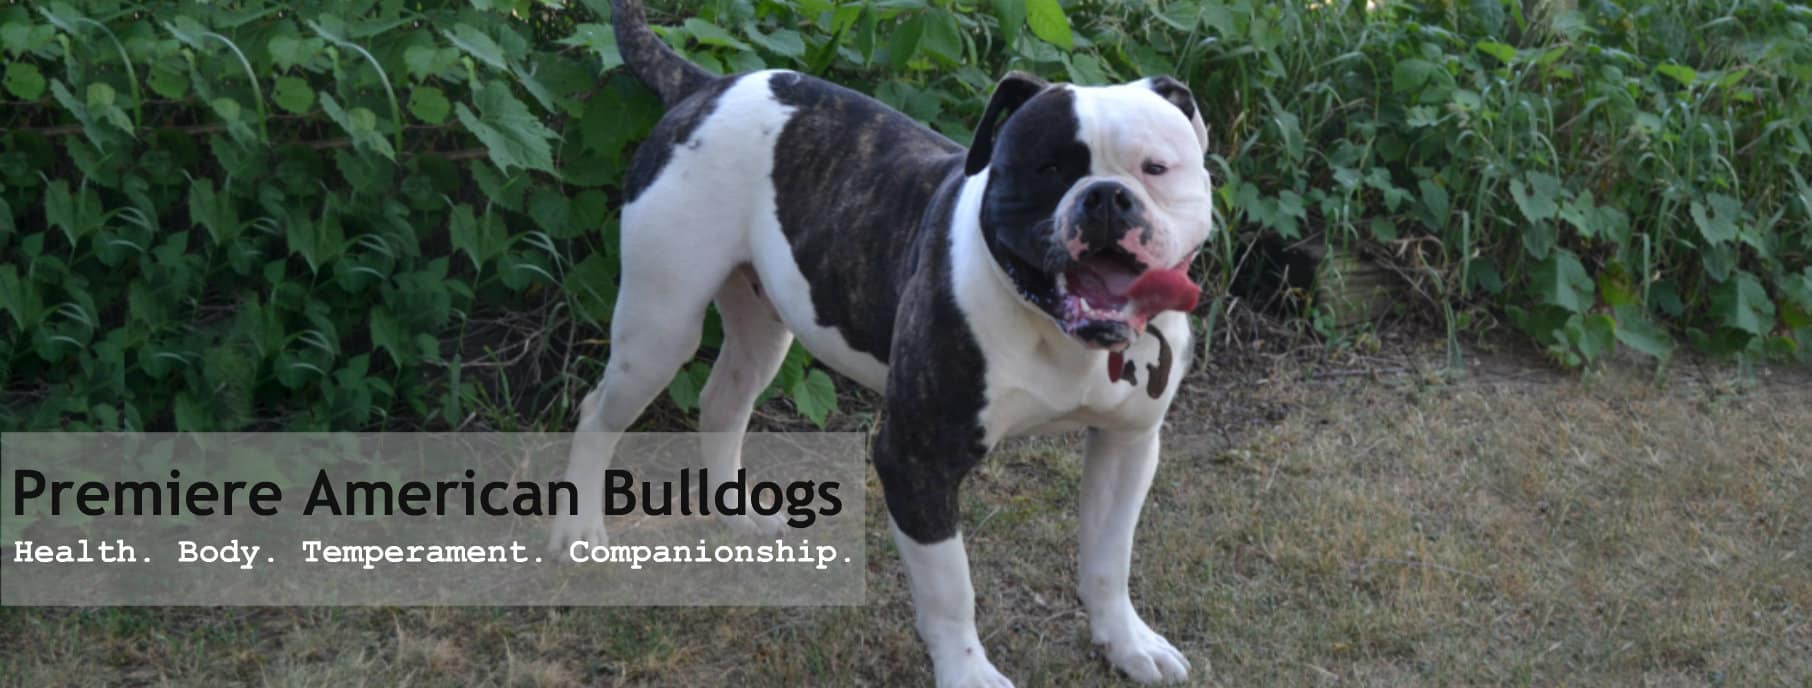 pedigree american bulldog puppies for sale